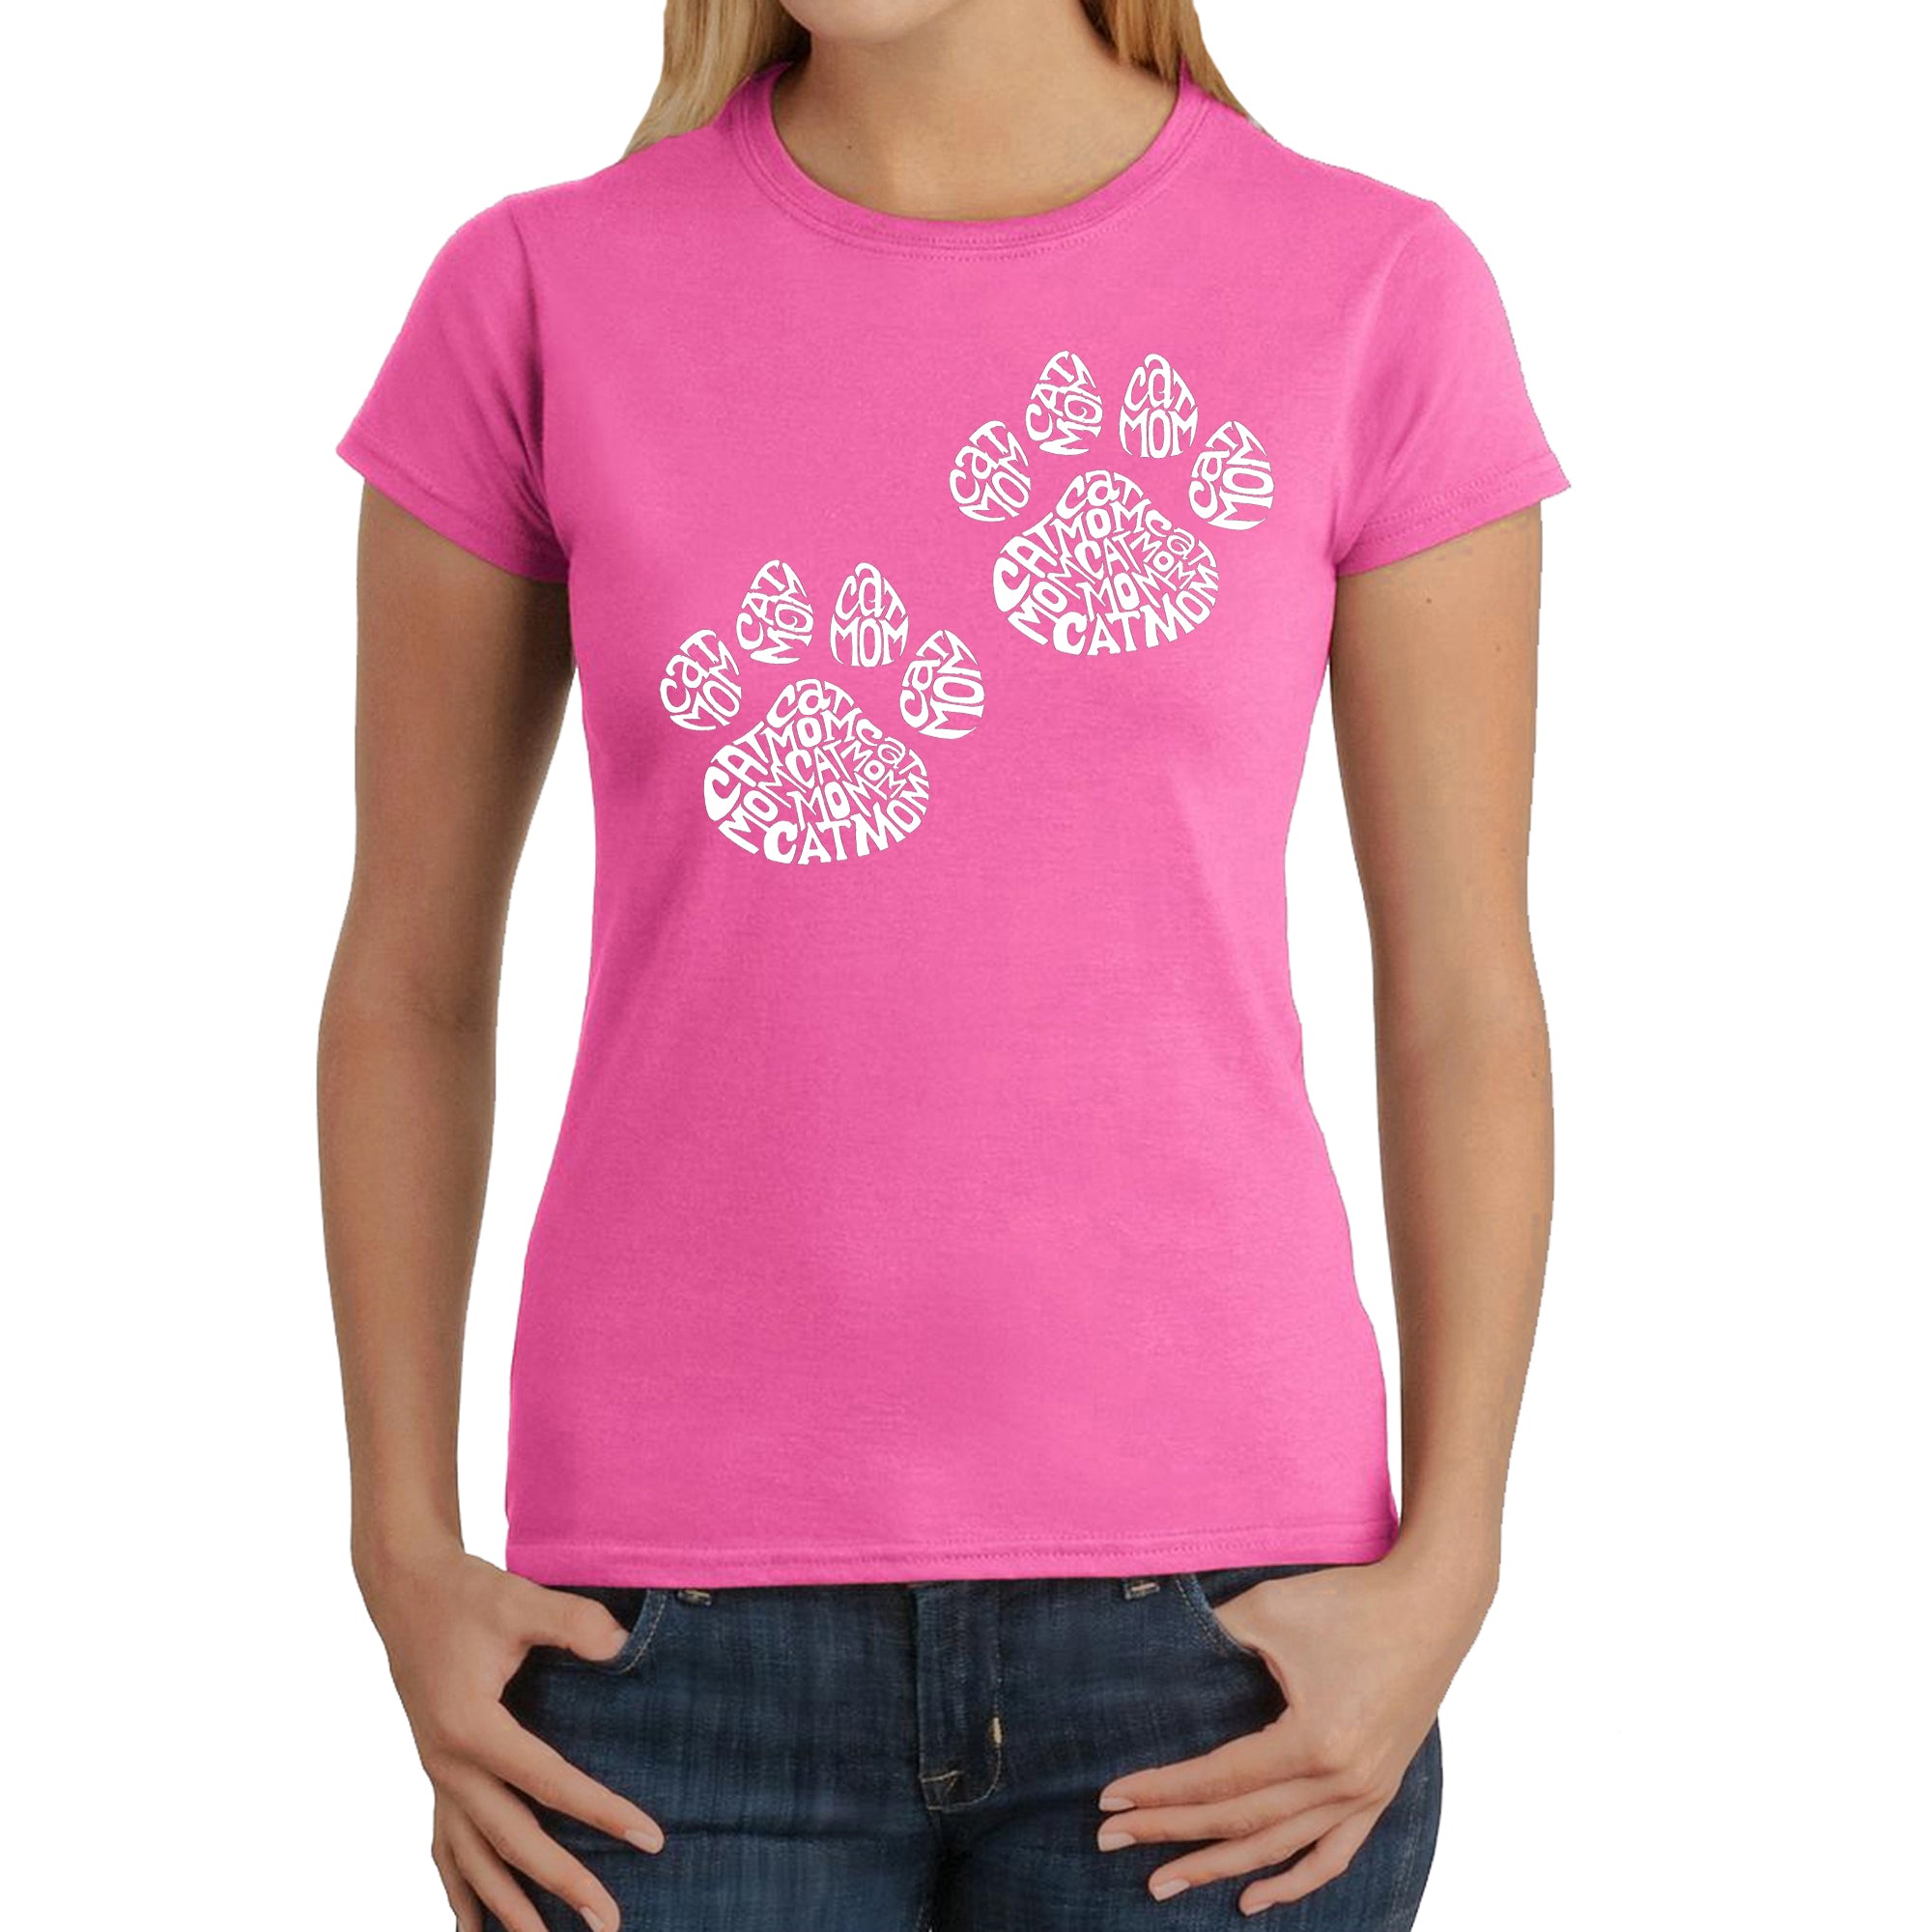 Cat Mom - Women's Word Art T-Shirt - Pink - XX-Large